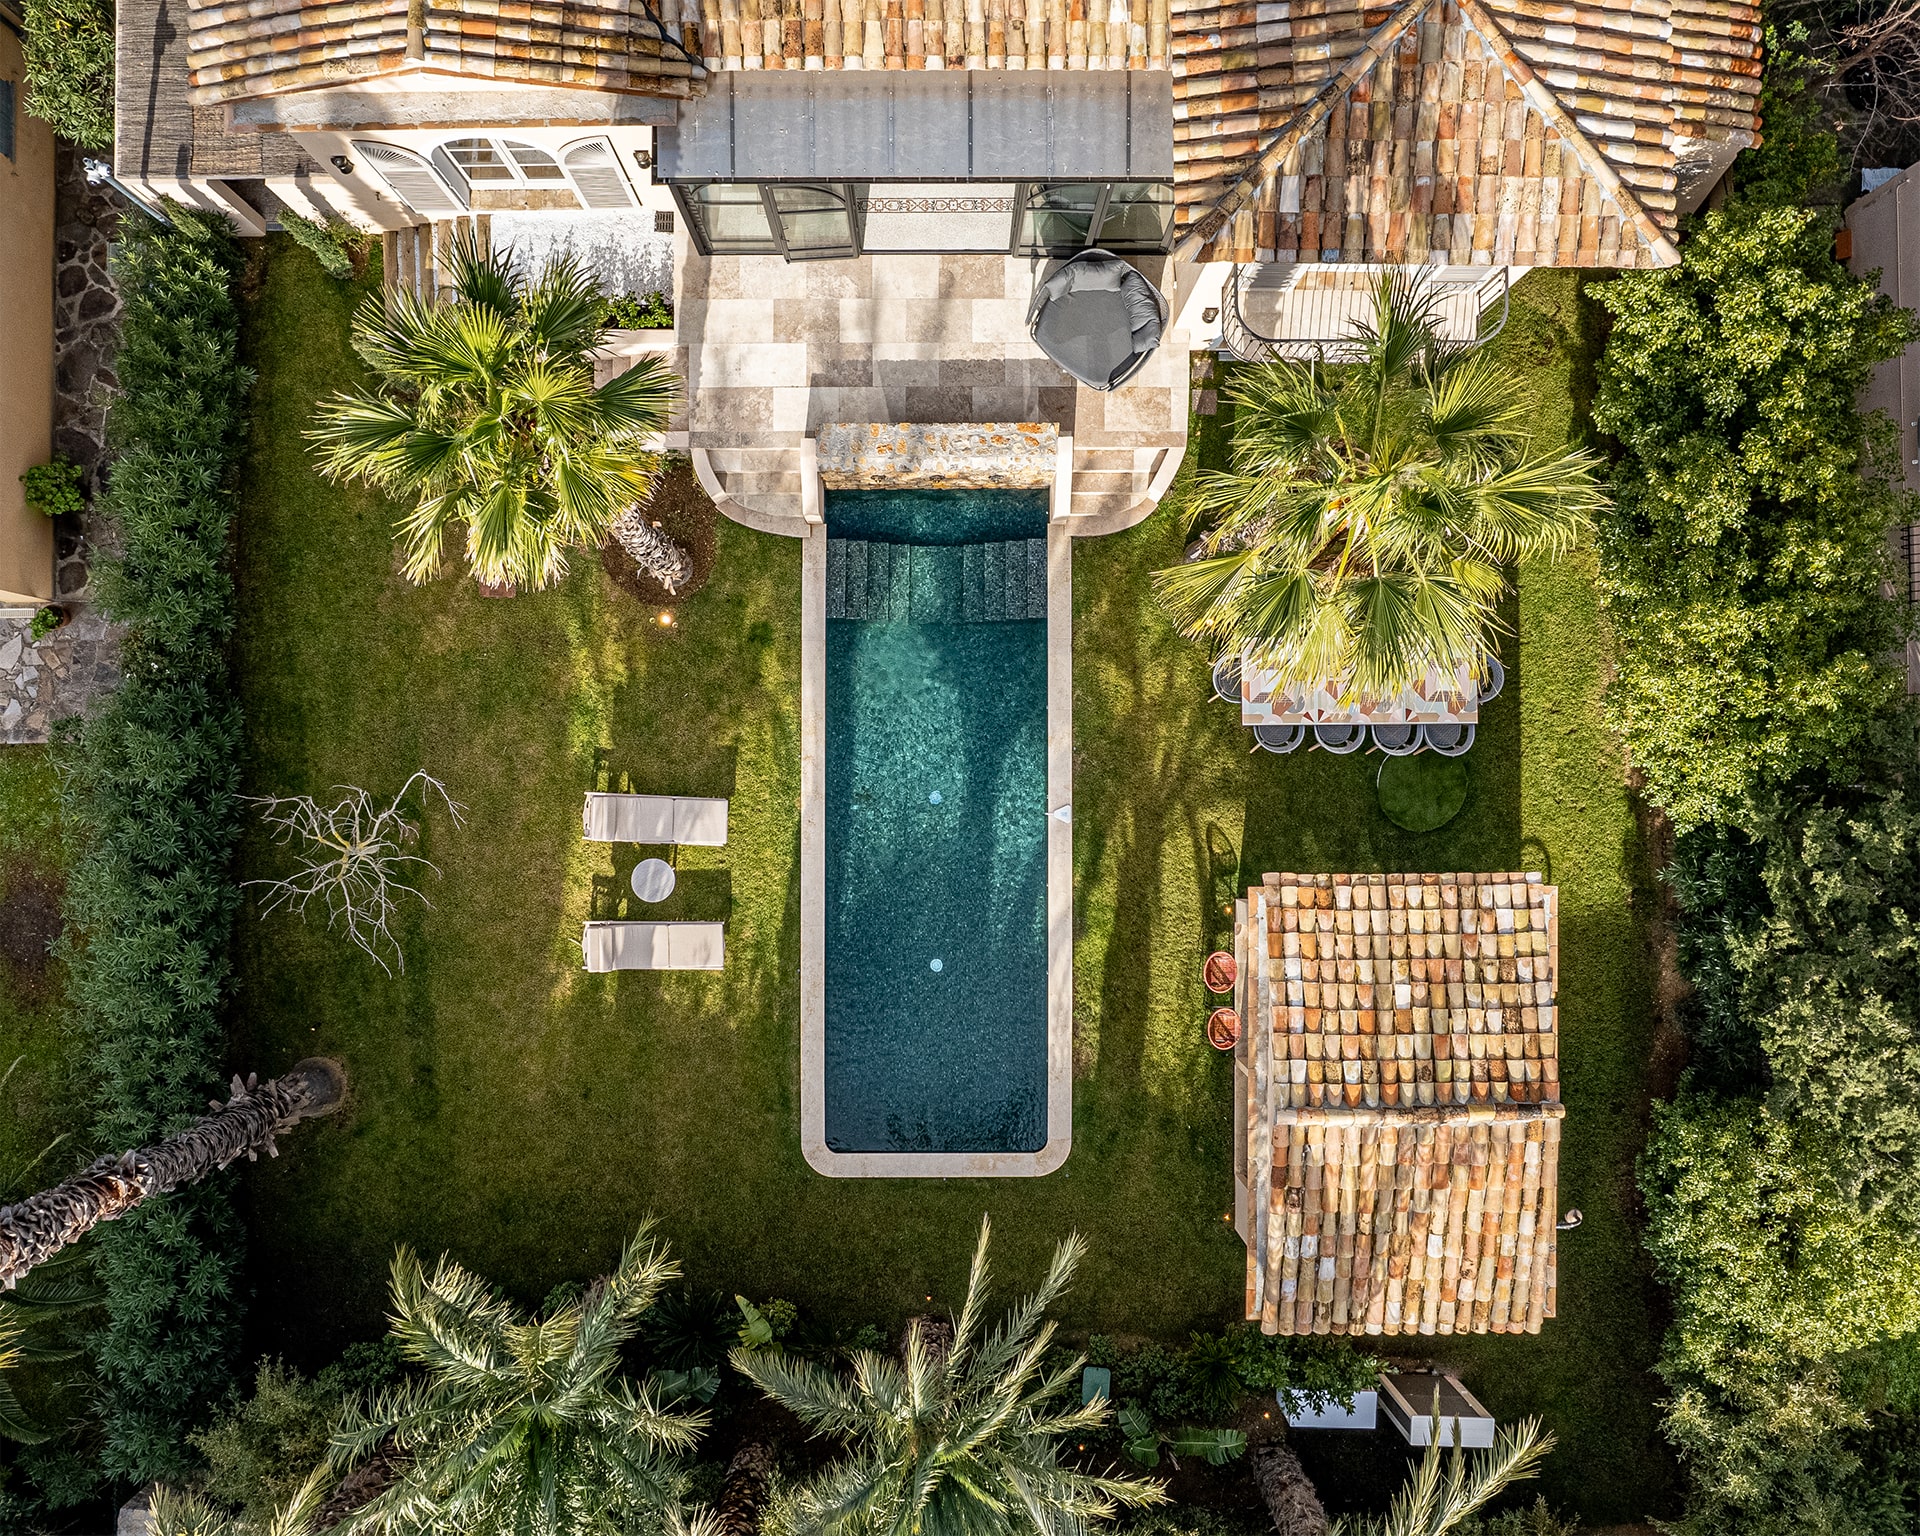 Agence Boris Folli - Architecture and project management - Saint-Tropez - Design and realization of a villa